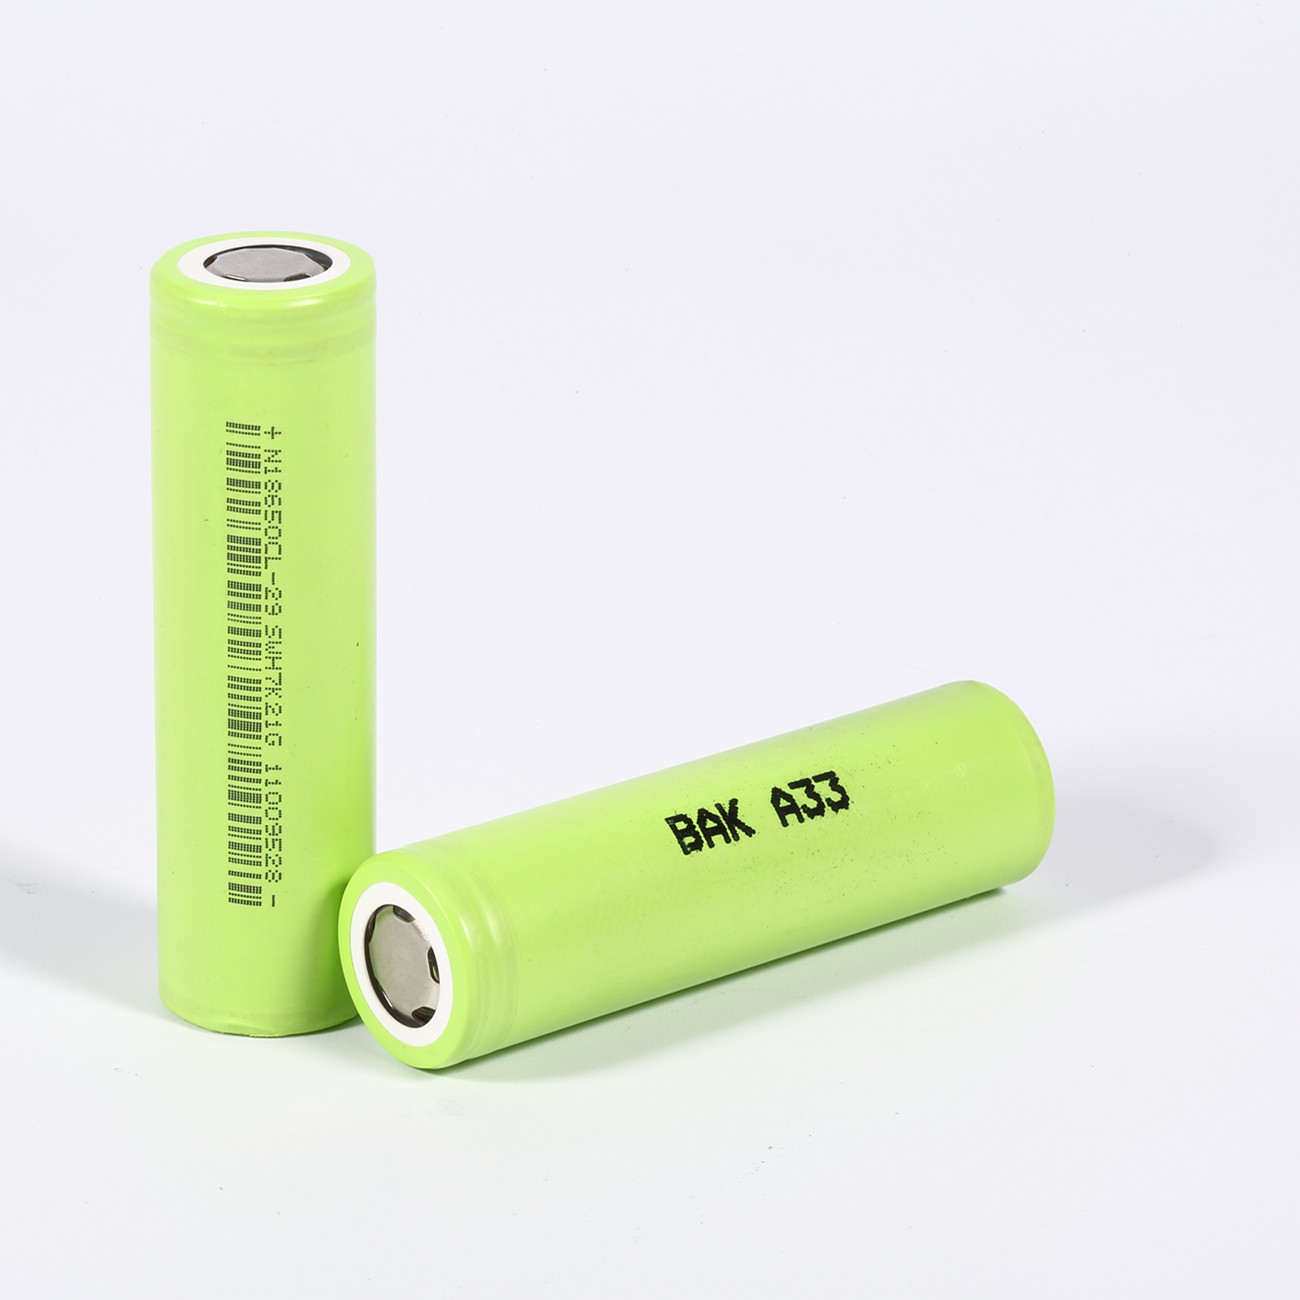 Baterias 18650 verdes 2900mah para laptops